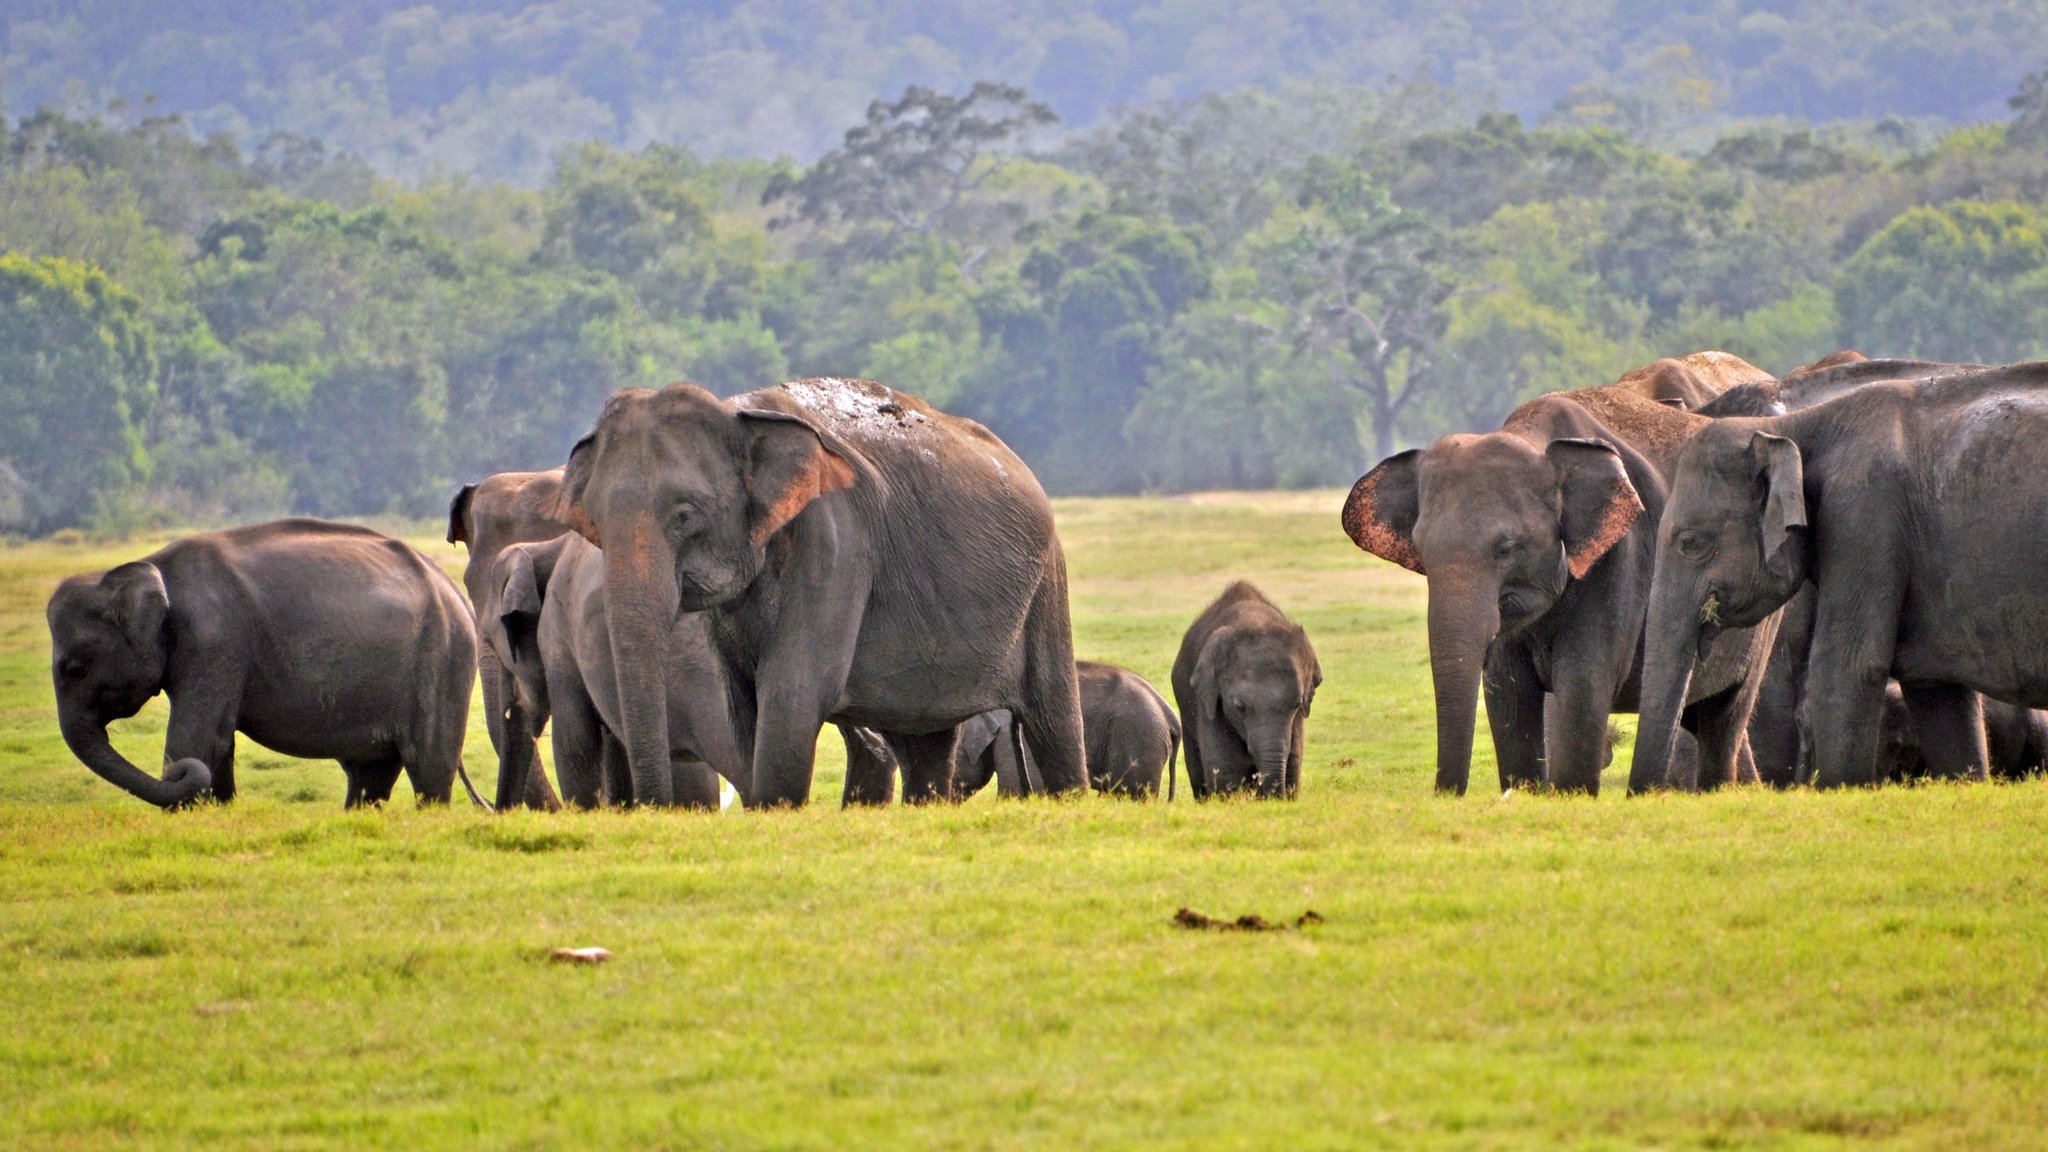 Sri Lanka elephants: 'Record number' of deaths in 2019 - BBC News